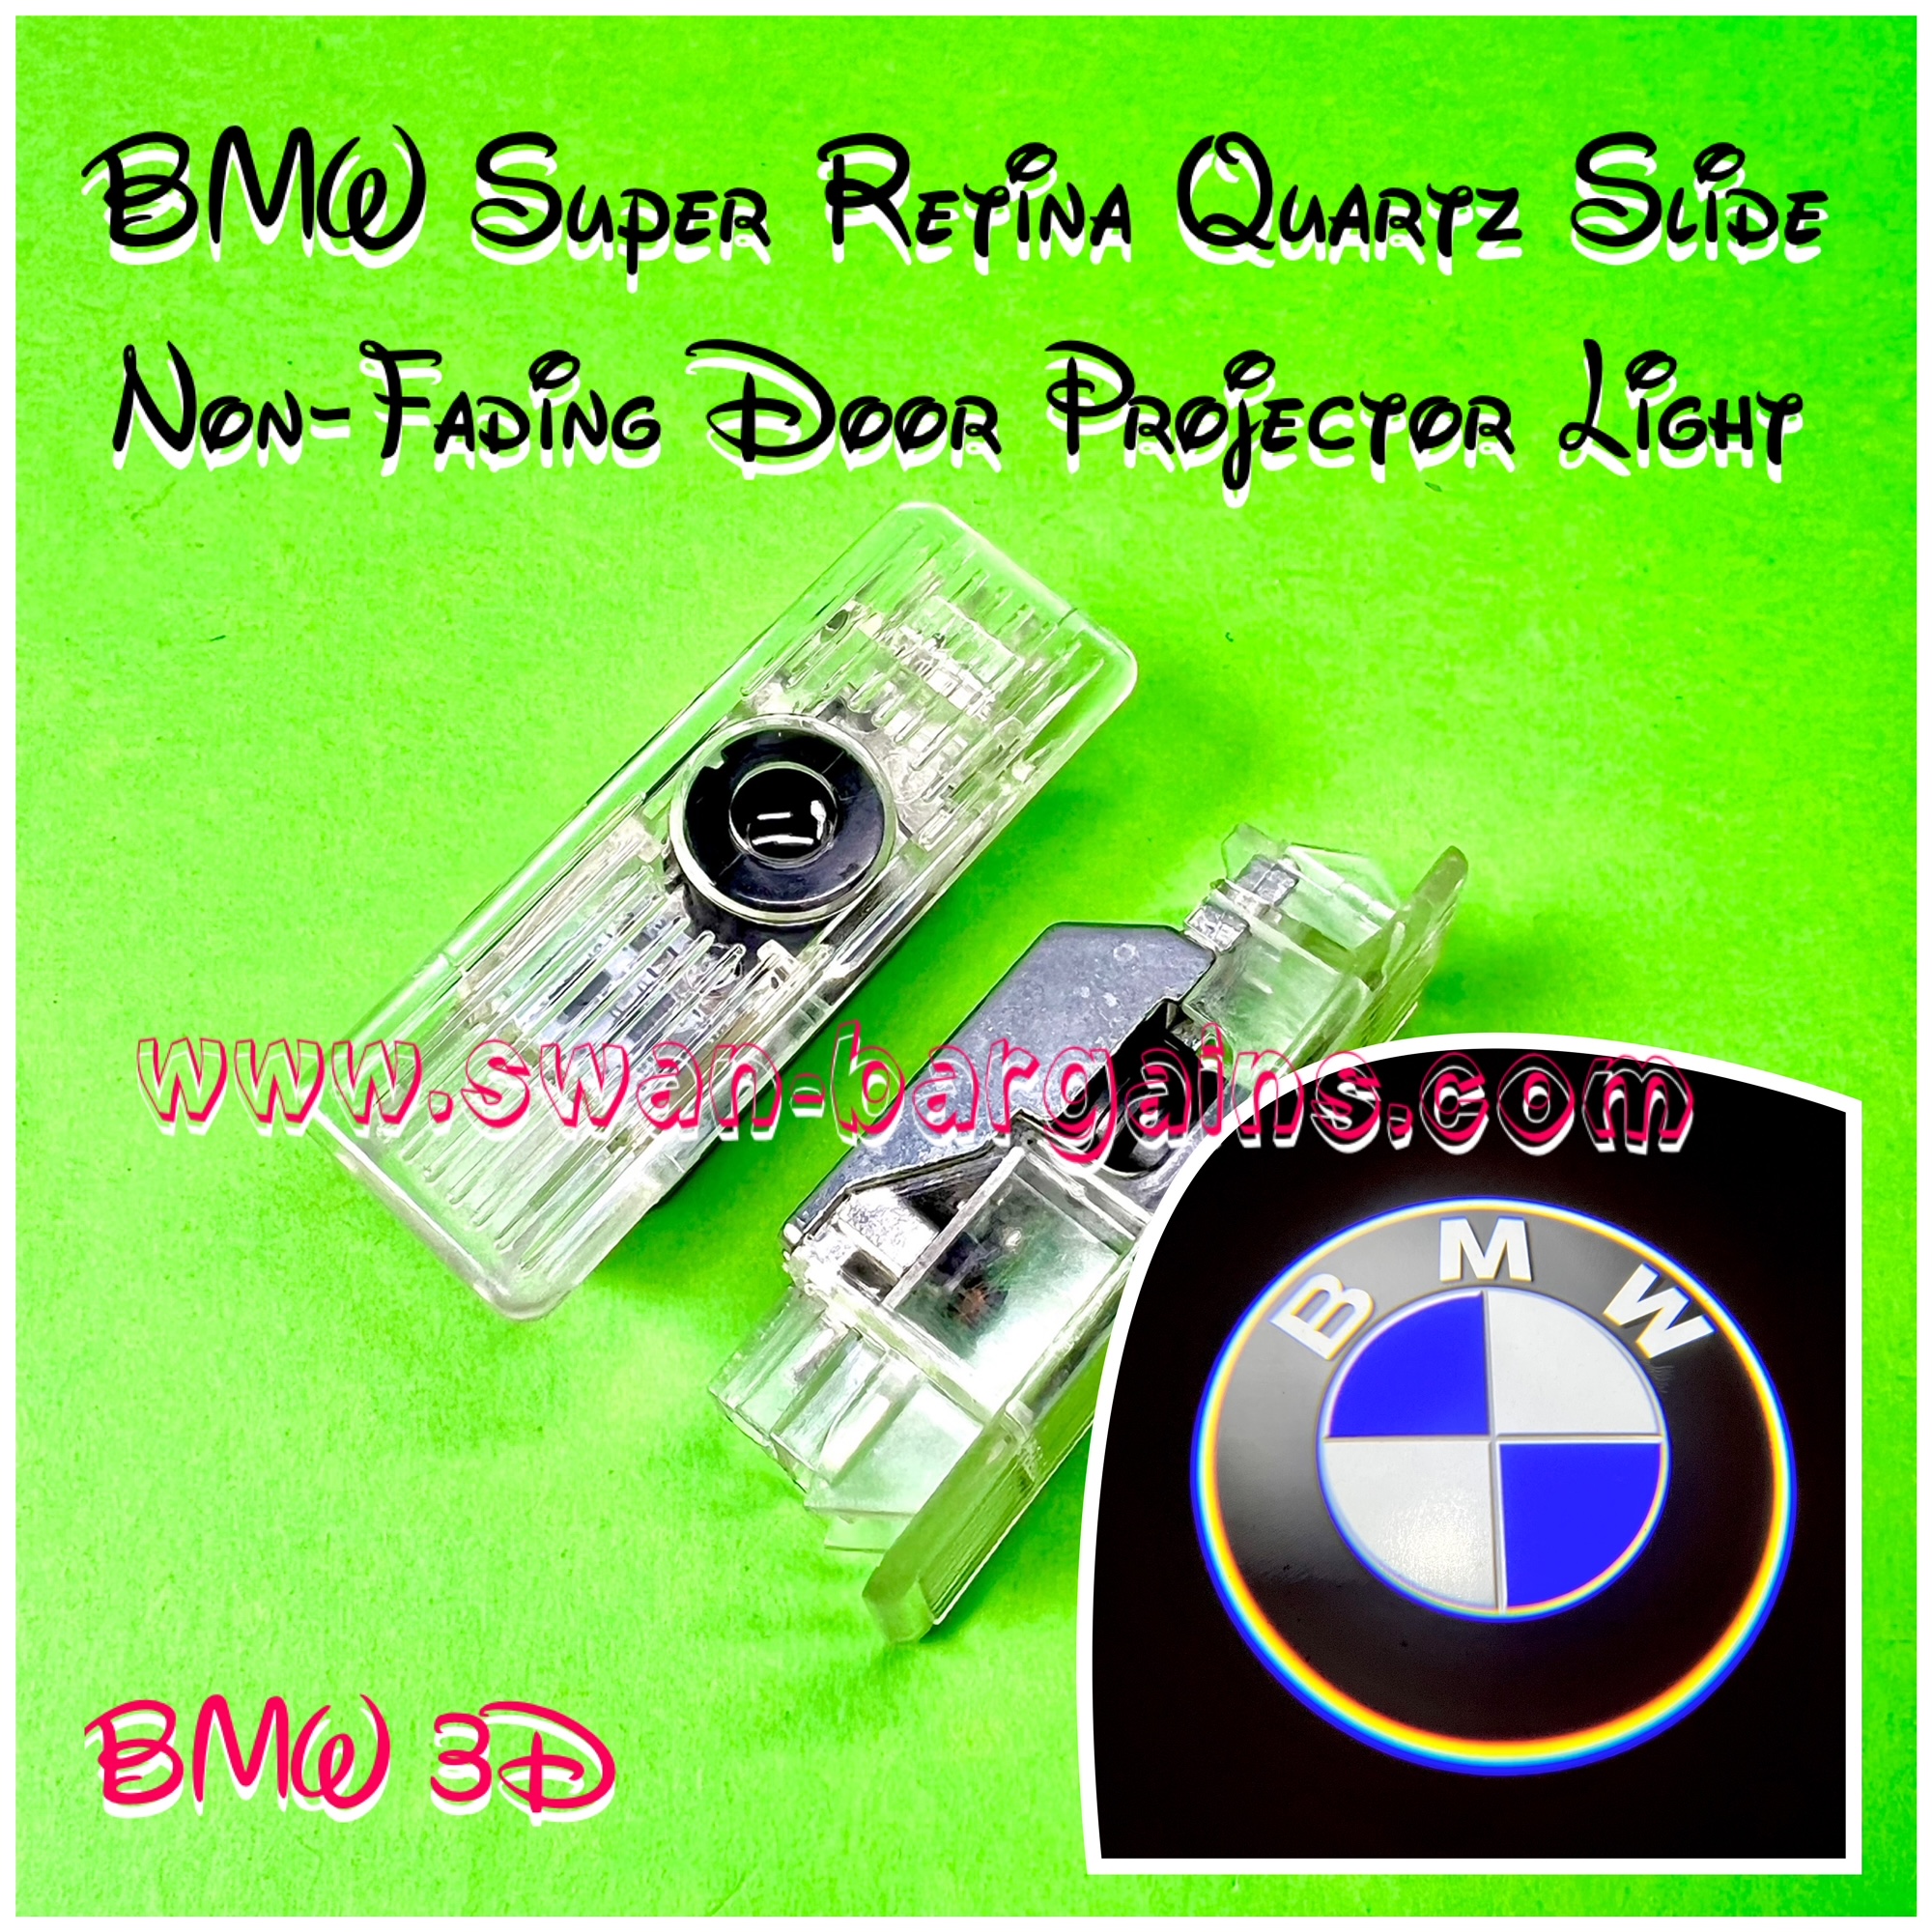 BMW Super Retina Non-Fading LED Projector Lamp Singapore - 3D BMW Classic Blue